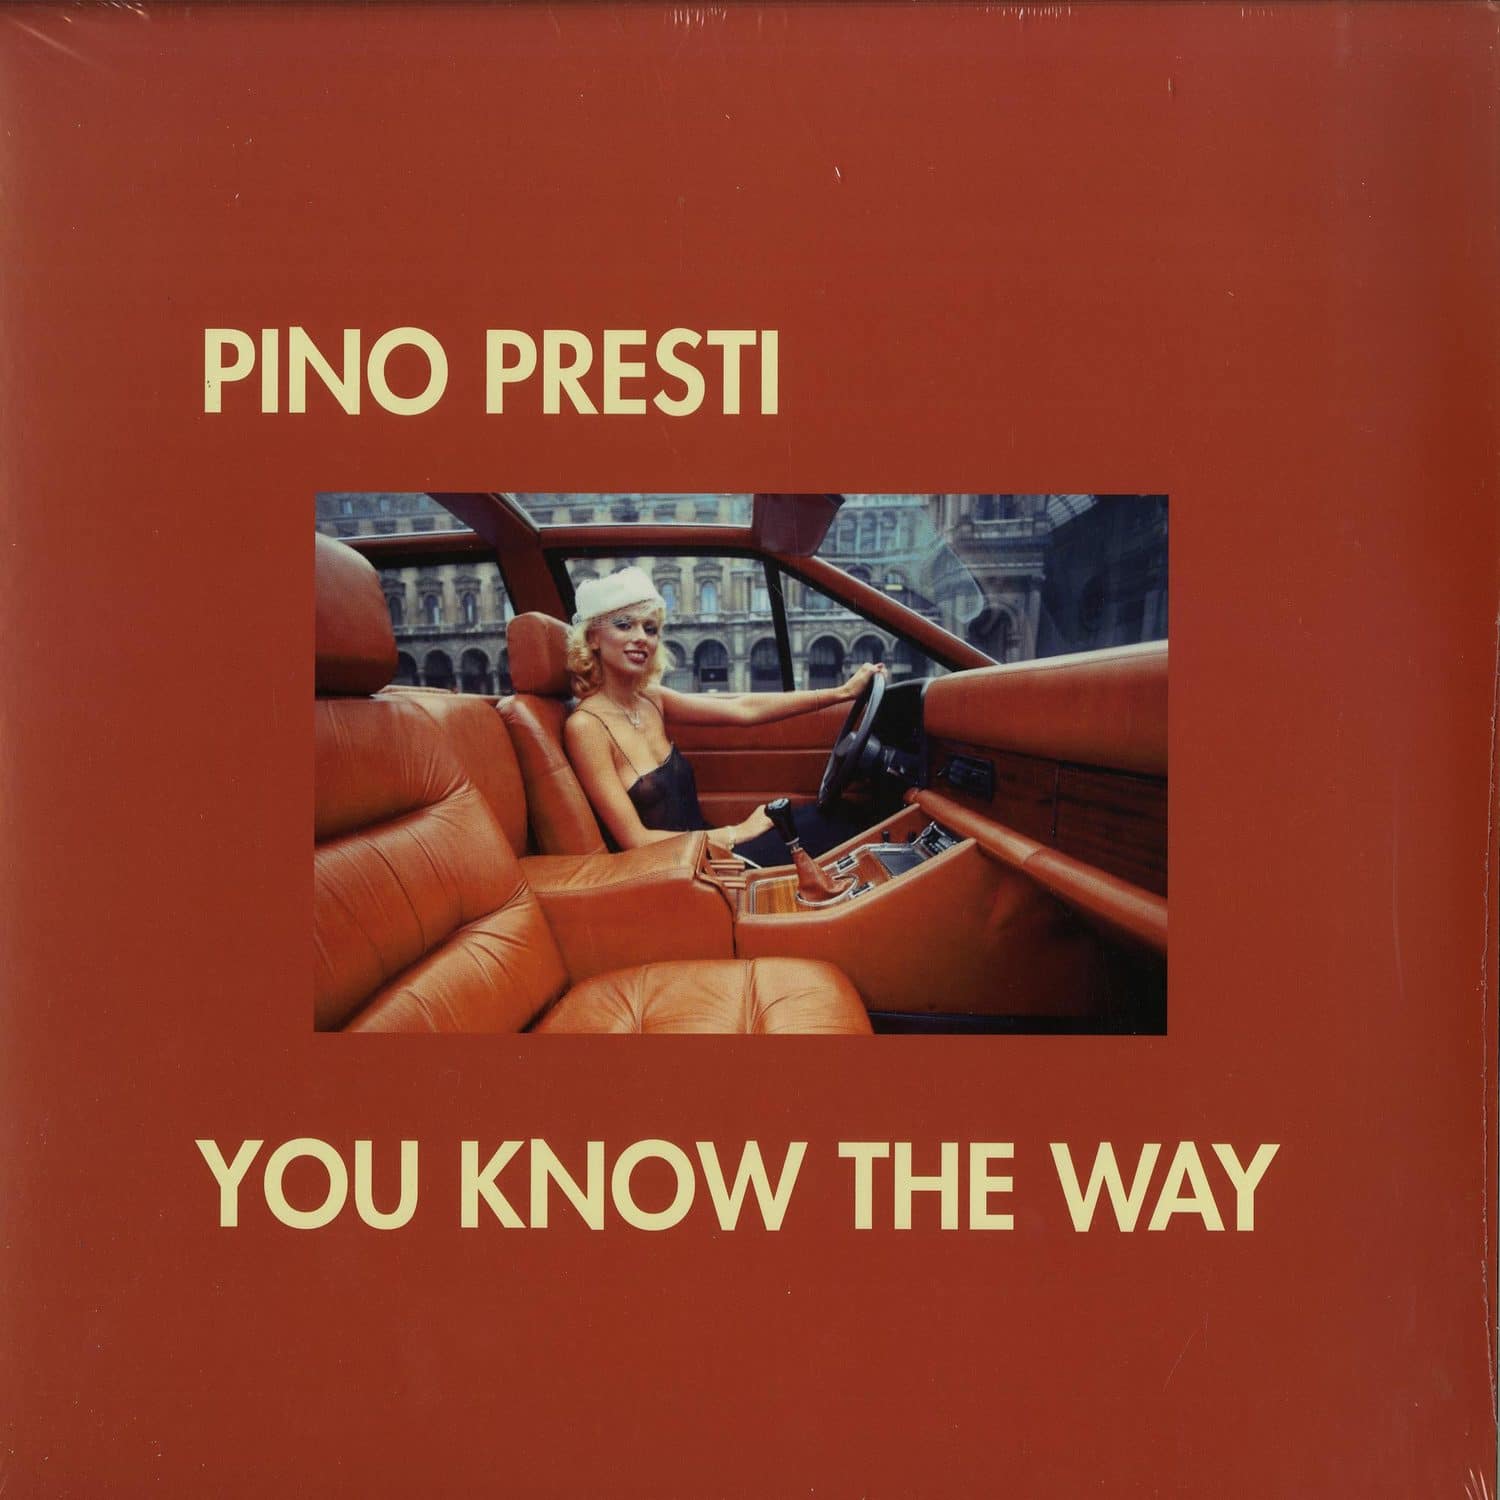 Pino Presti - YOU KNOW THE WAY